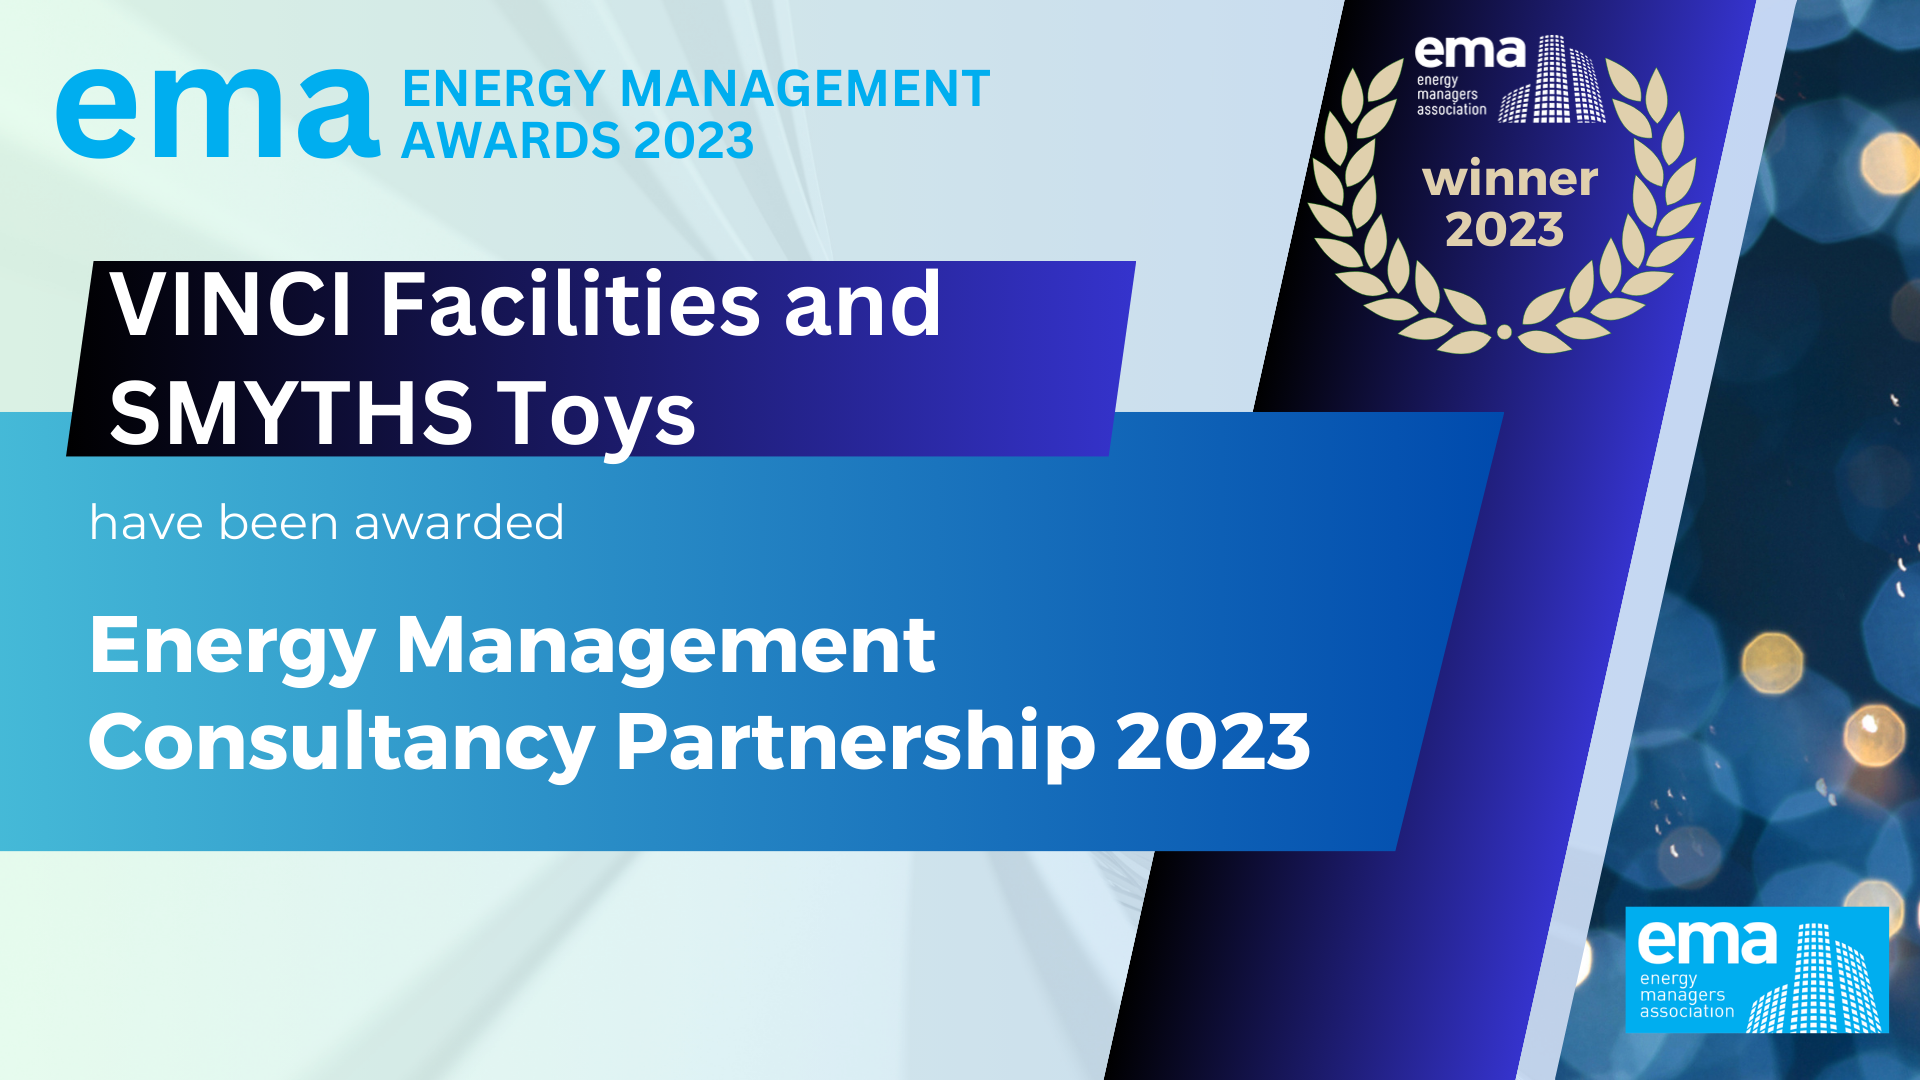 Energy Management Consultancy Partnership 2023 Winner